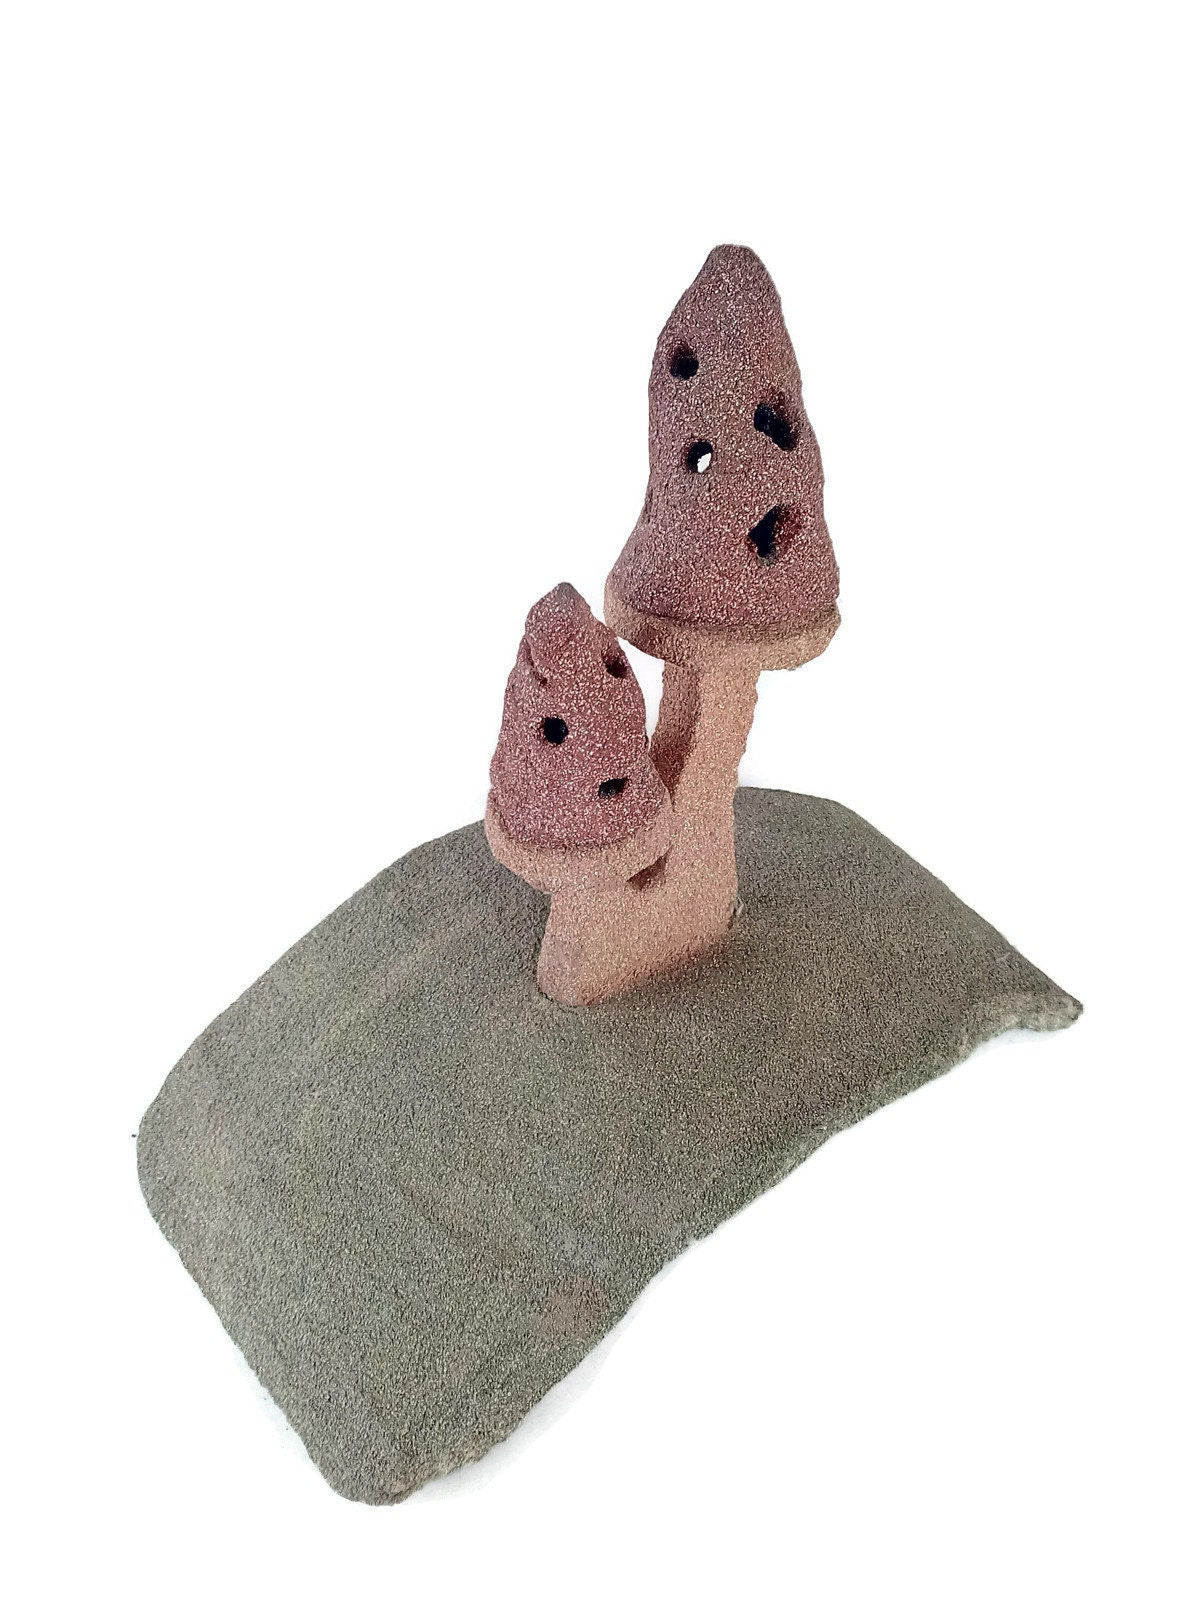 handmade ceramic mushroom sculpture, office desk accessories for men, Best Gifts For Him, mushroom lovers gift, abstract sculpture weird - Ceramica Ana Rafael